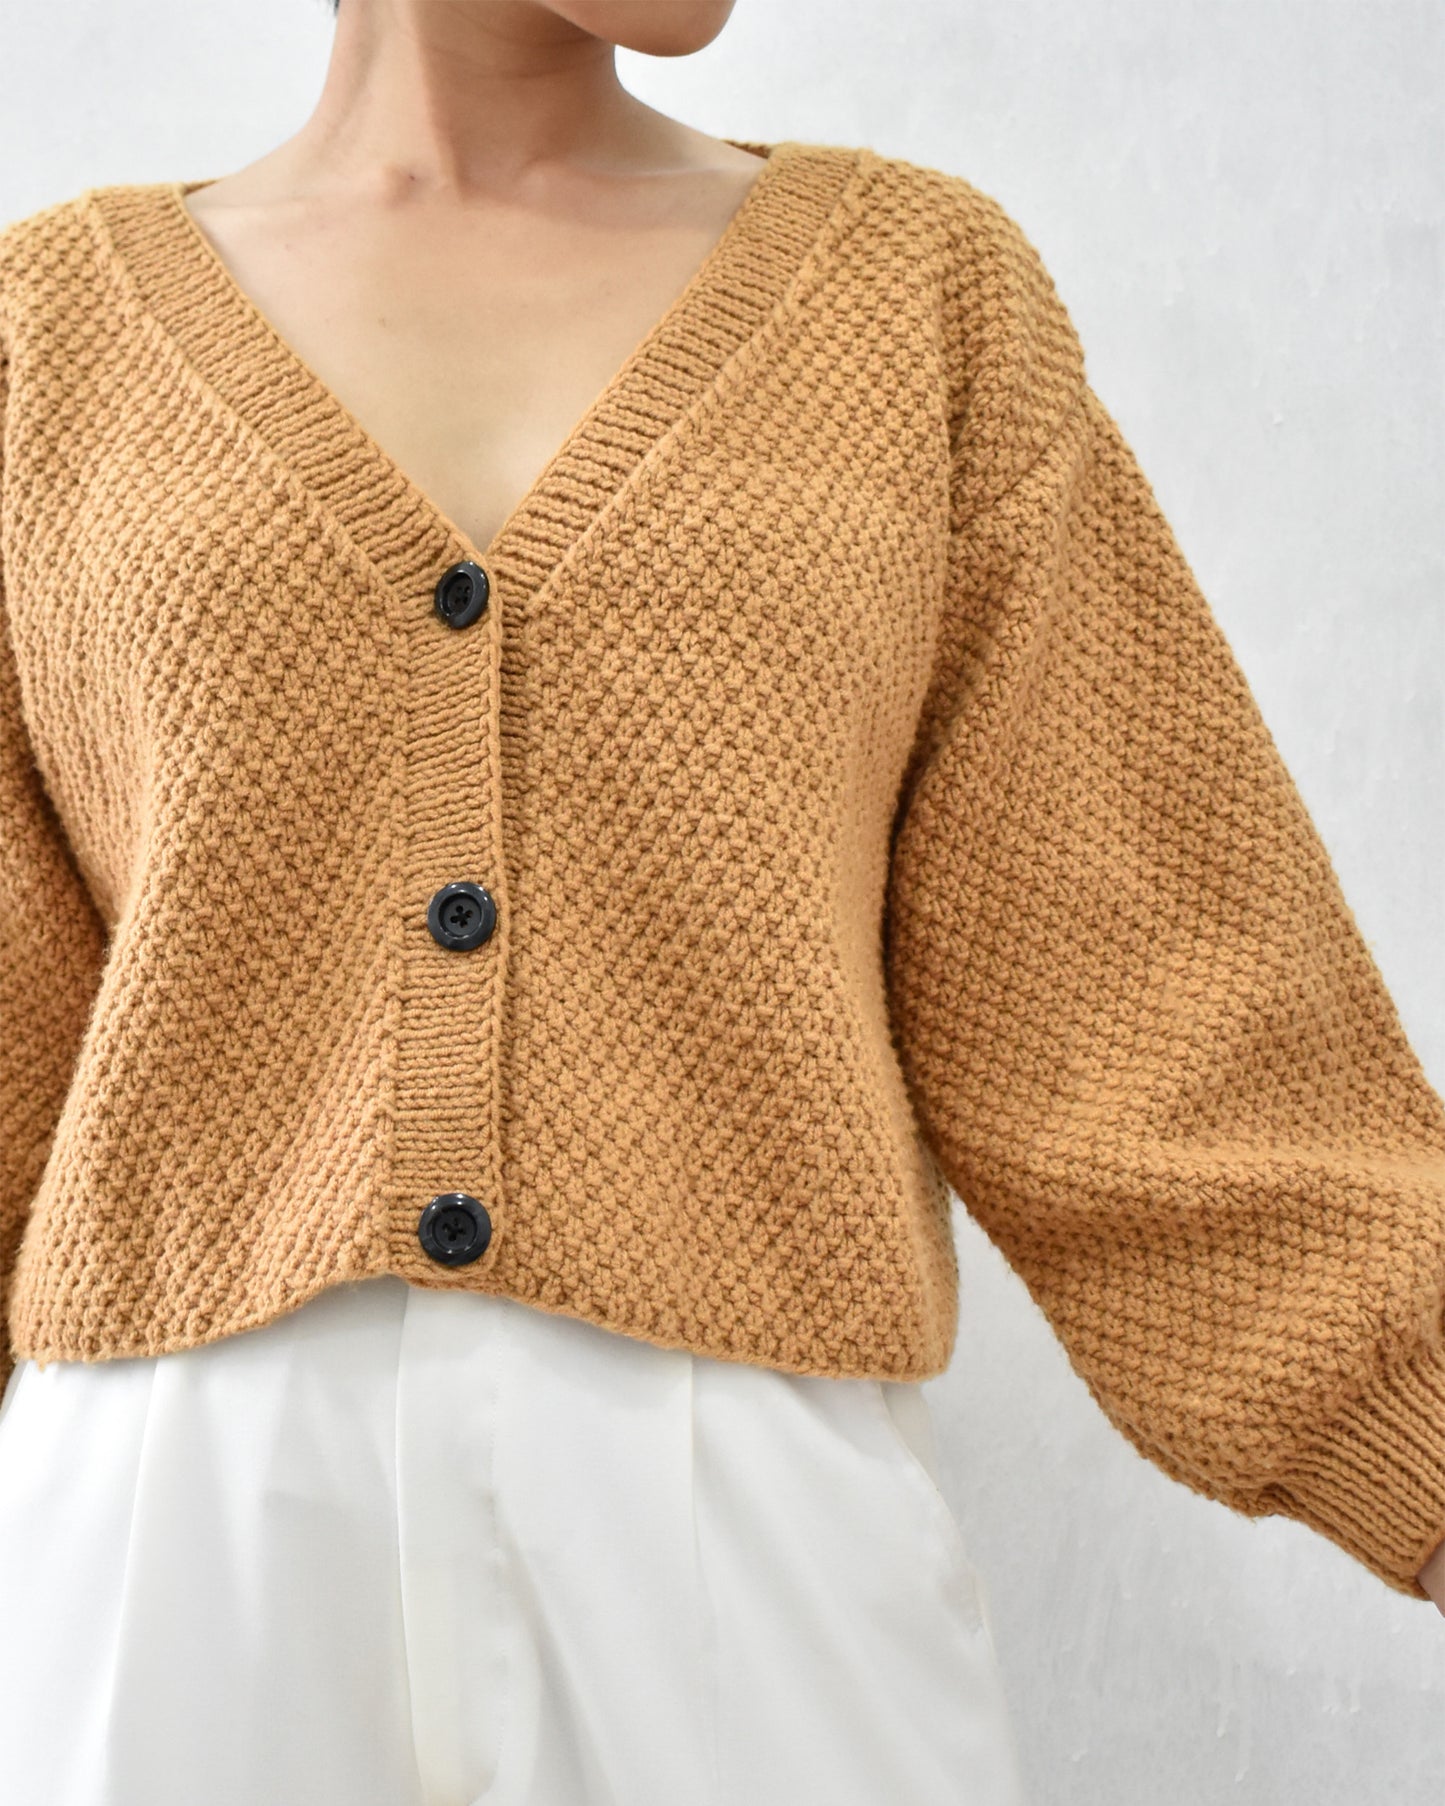 Cardigan No.10 | Easy knitting pattern